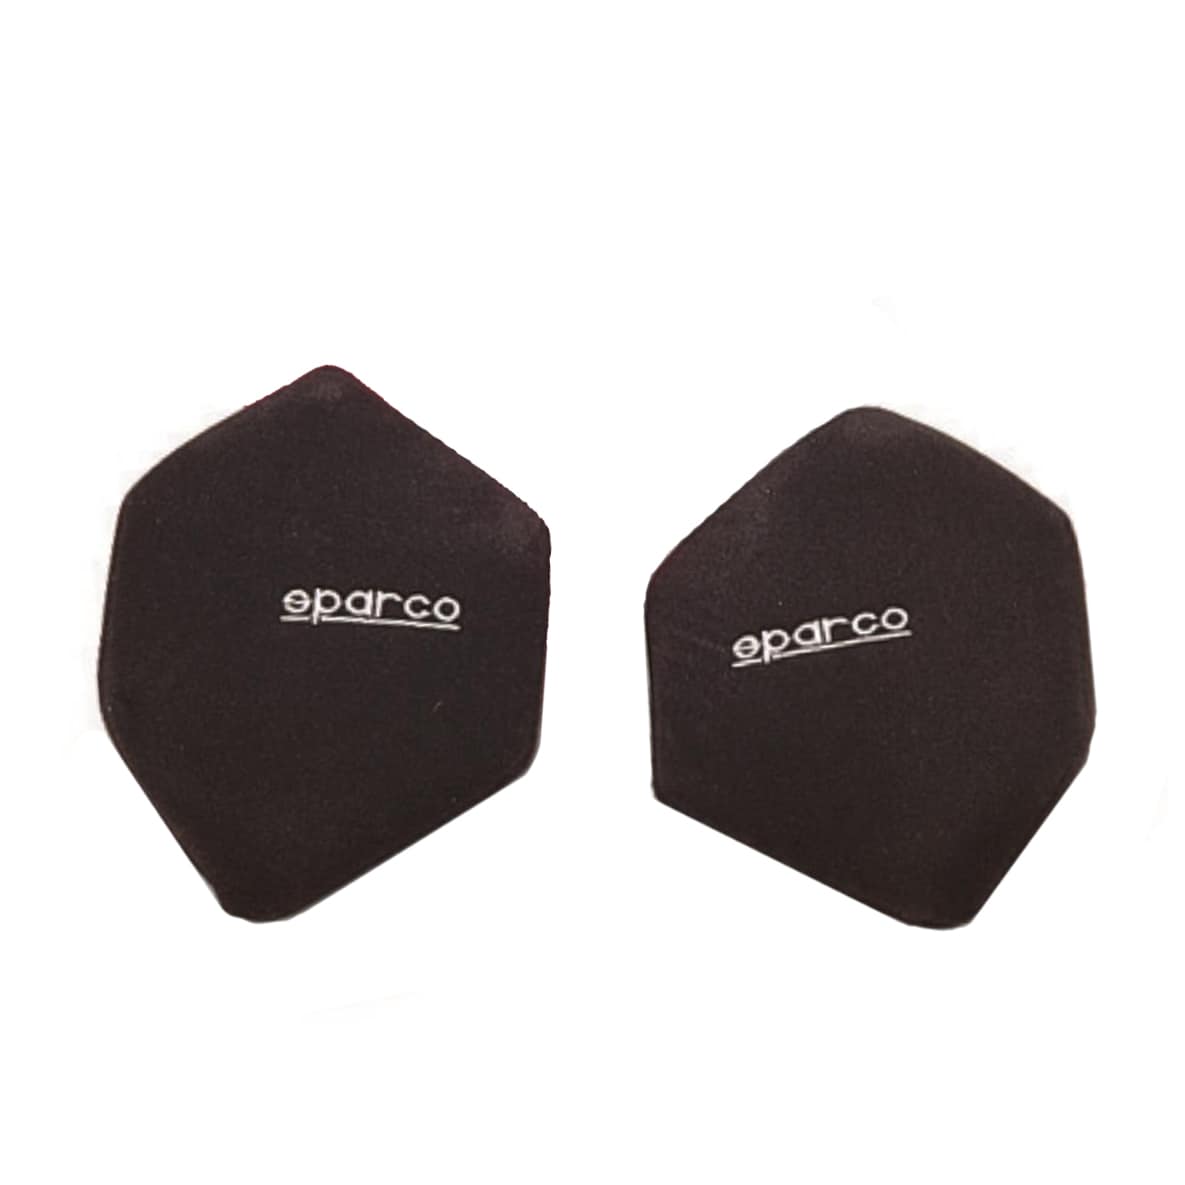 Sparco Padding Compound - SPR15025